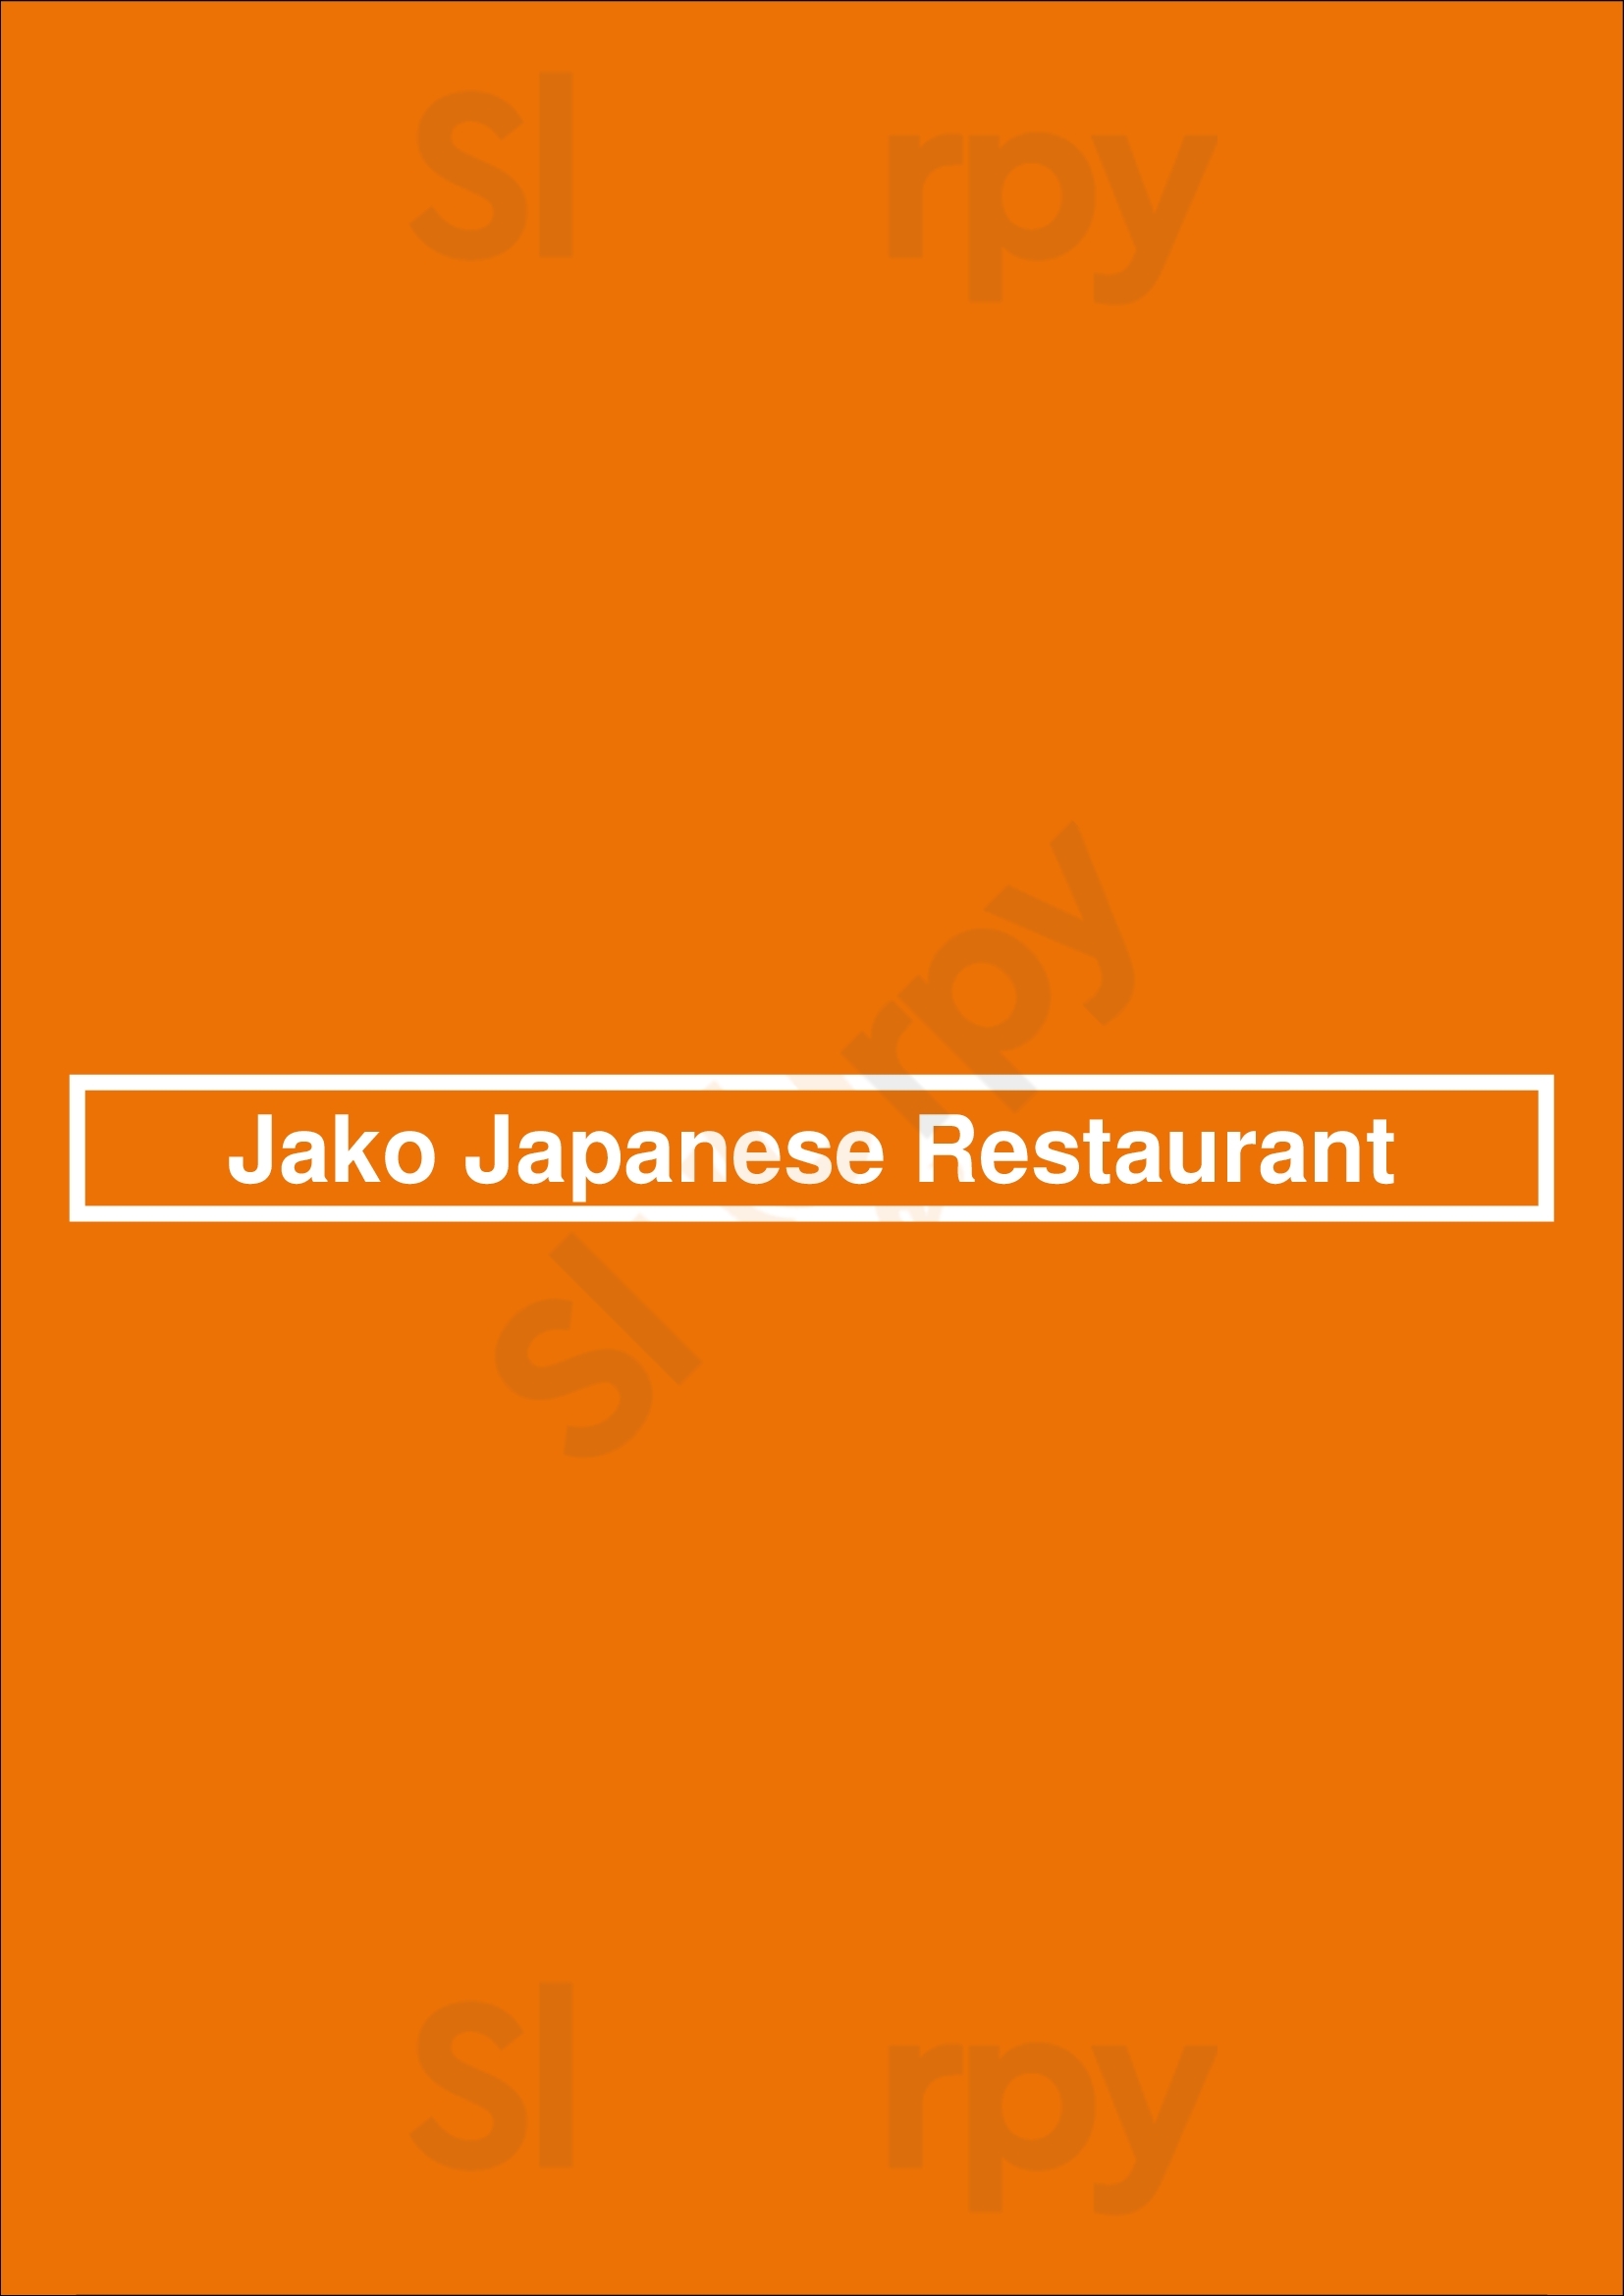 Jako Japanese Restaurant Vancouver Menu - 1